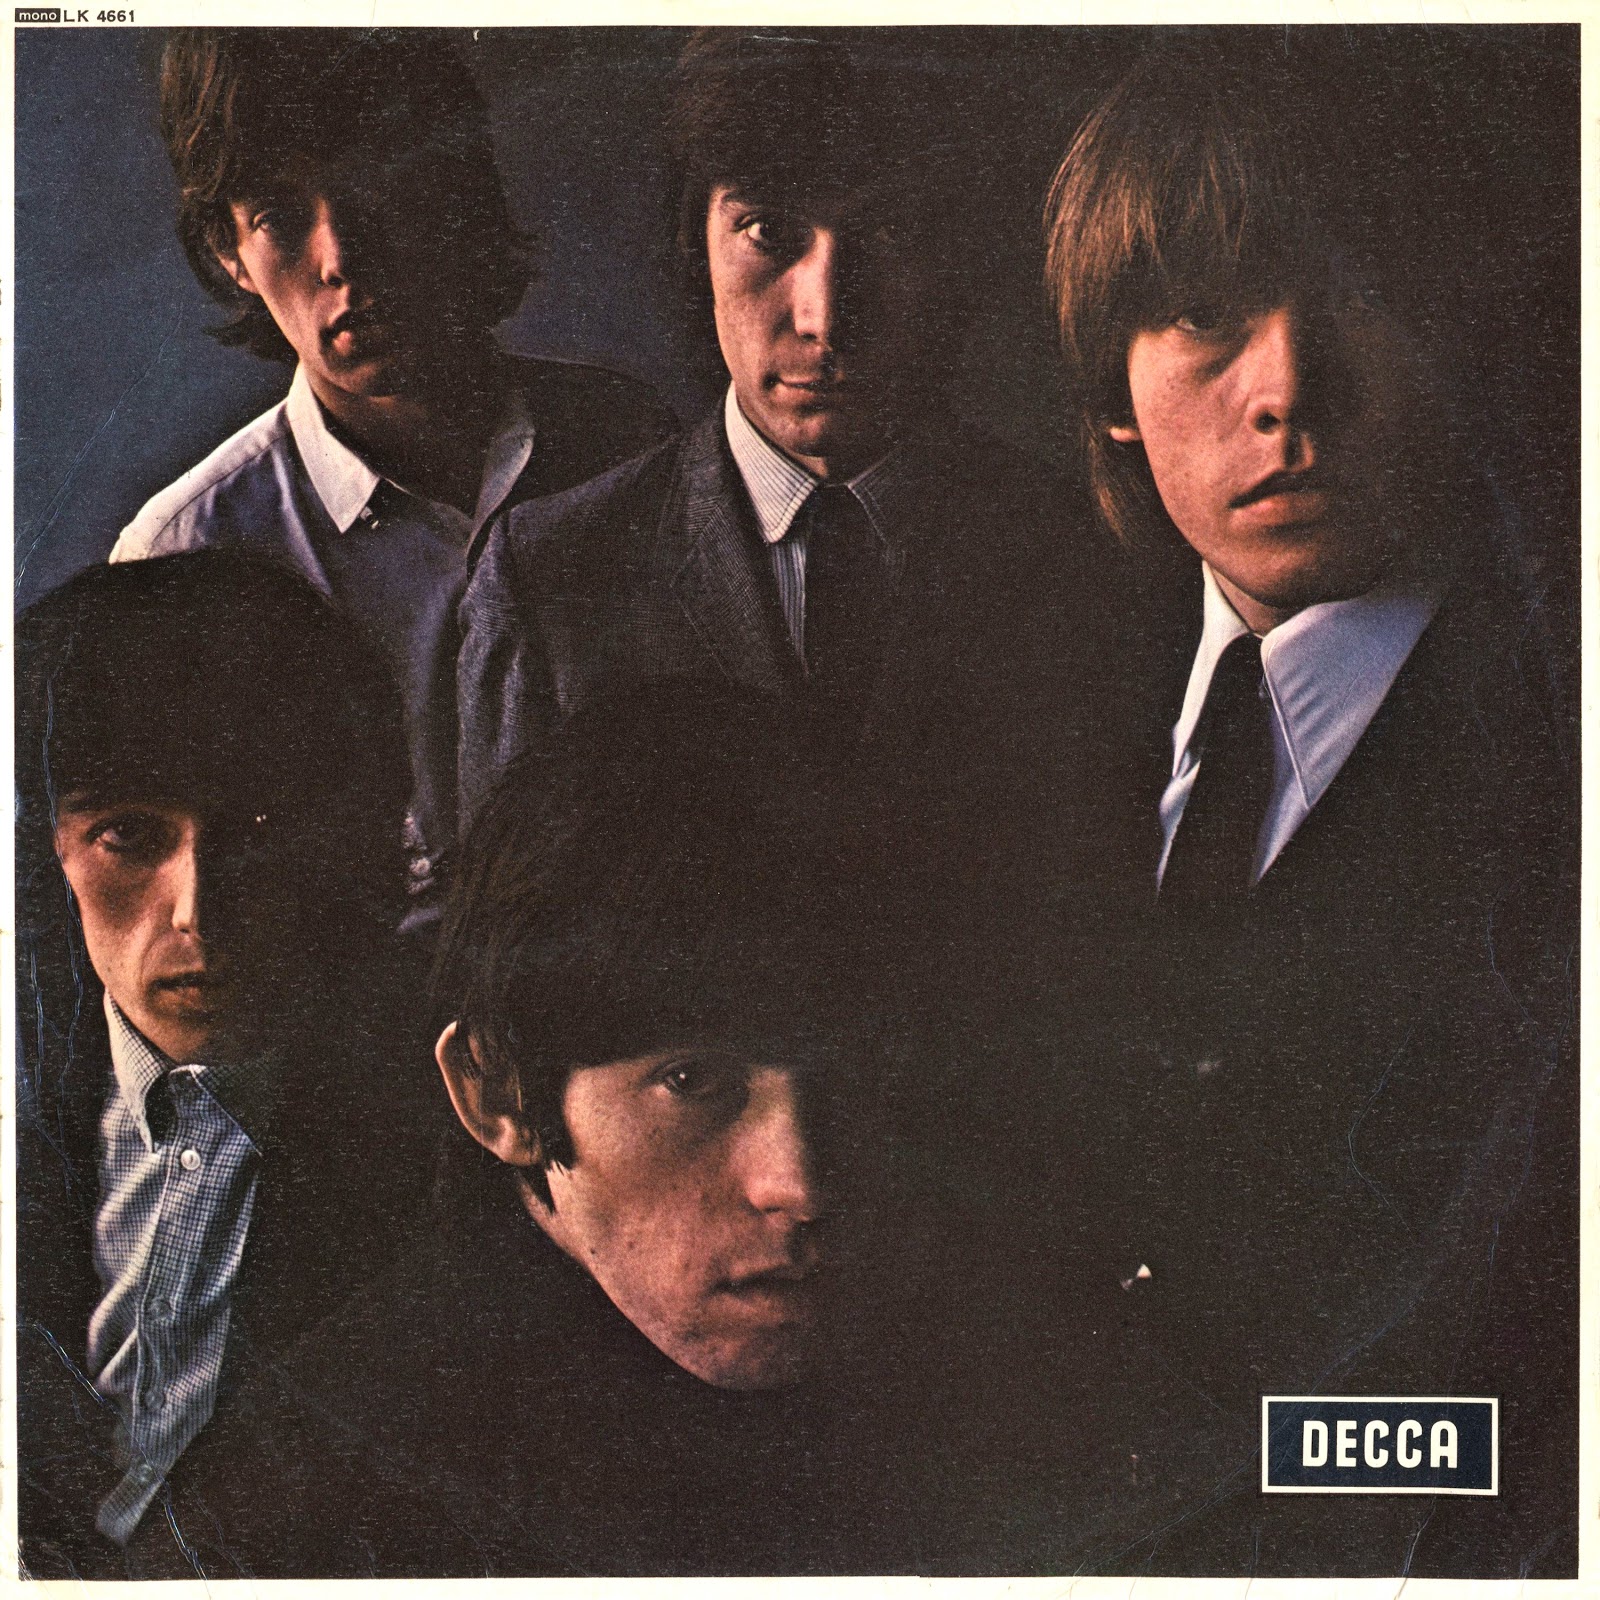 1965_The_Rolling_Stones_No.2___The_Rolling_Stones__L.P_U.K_Decca_Records_LK_4661____1_